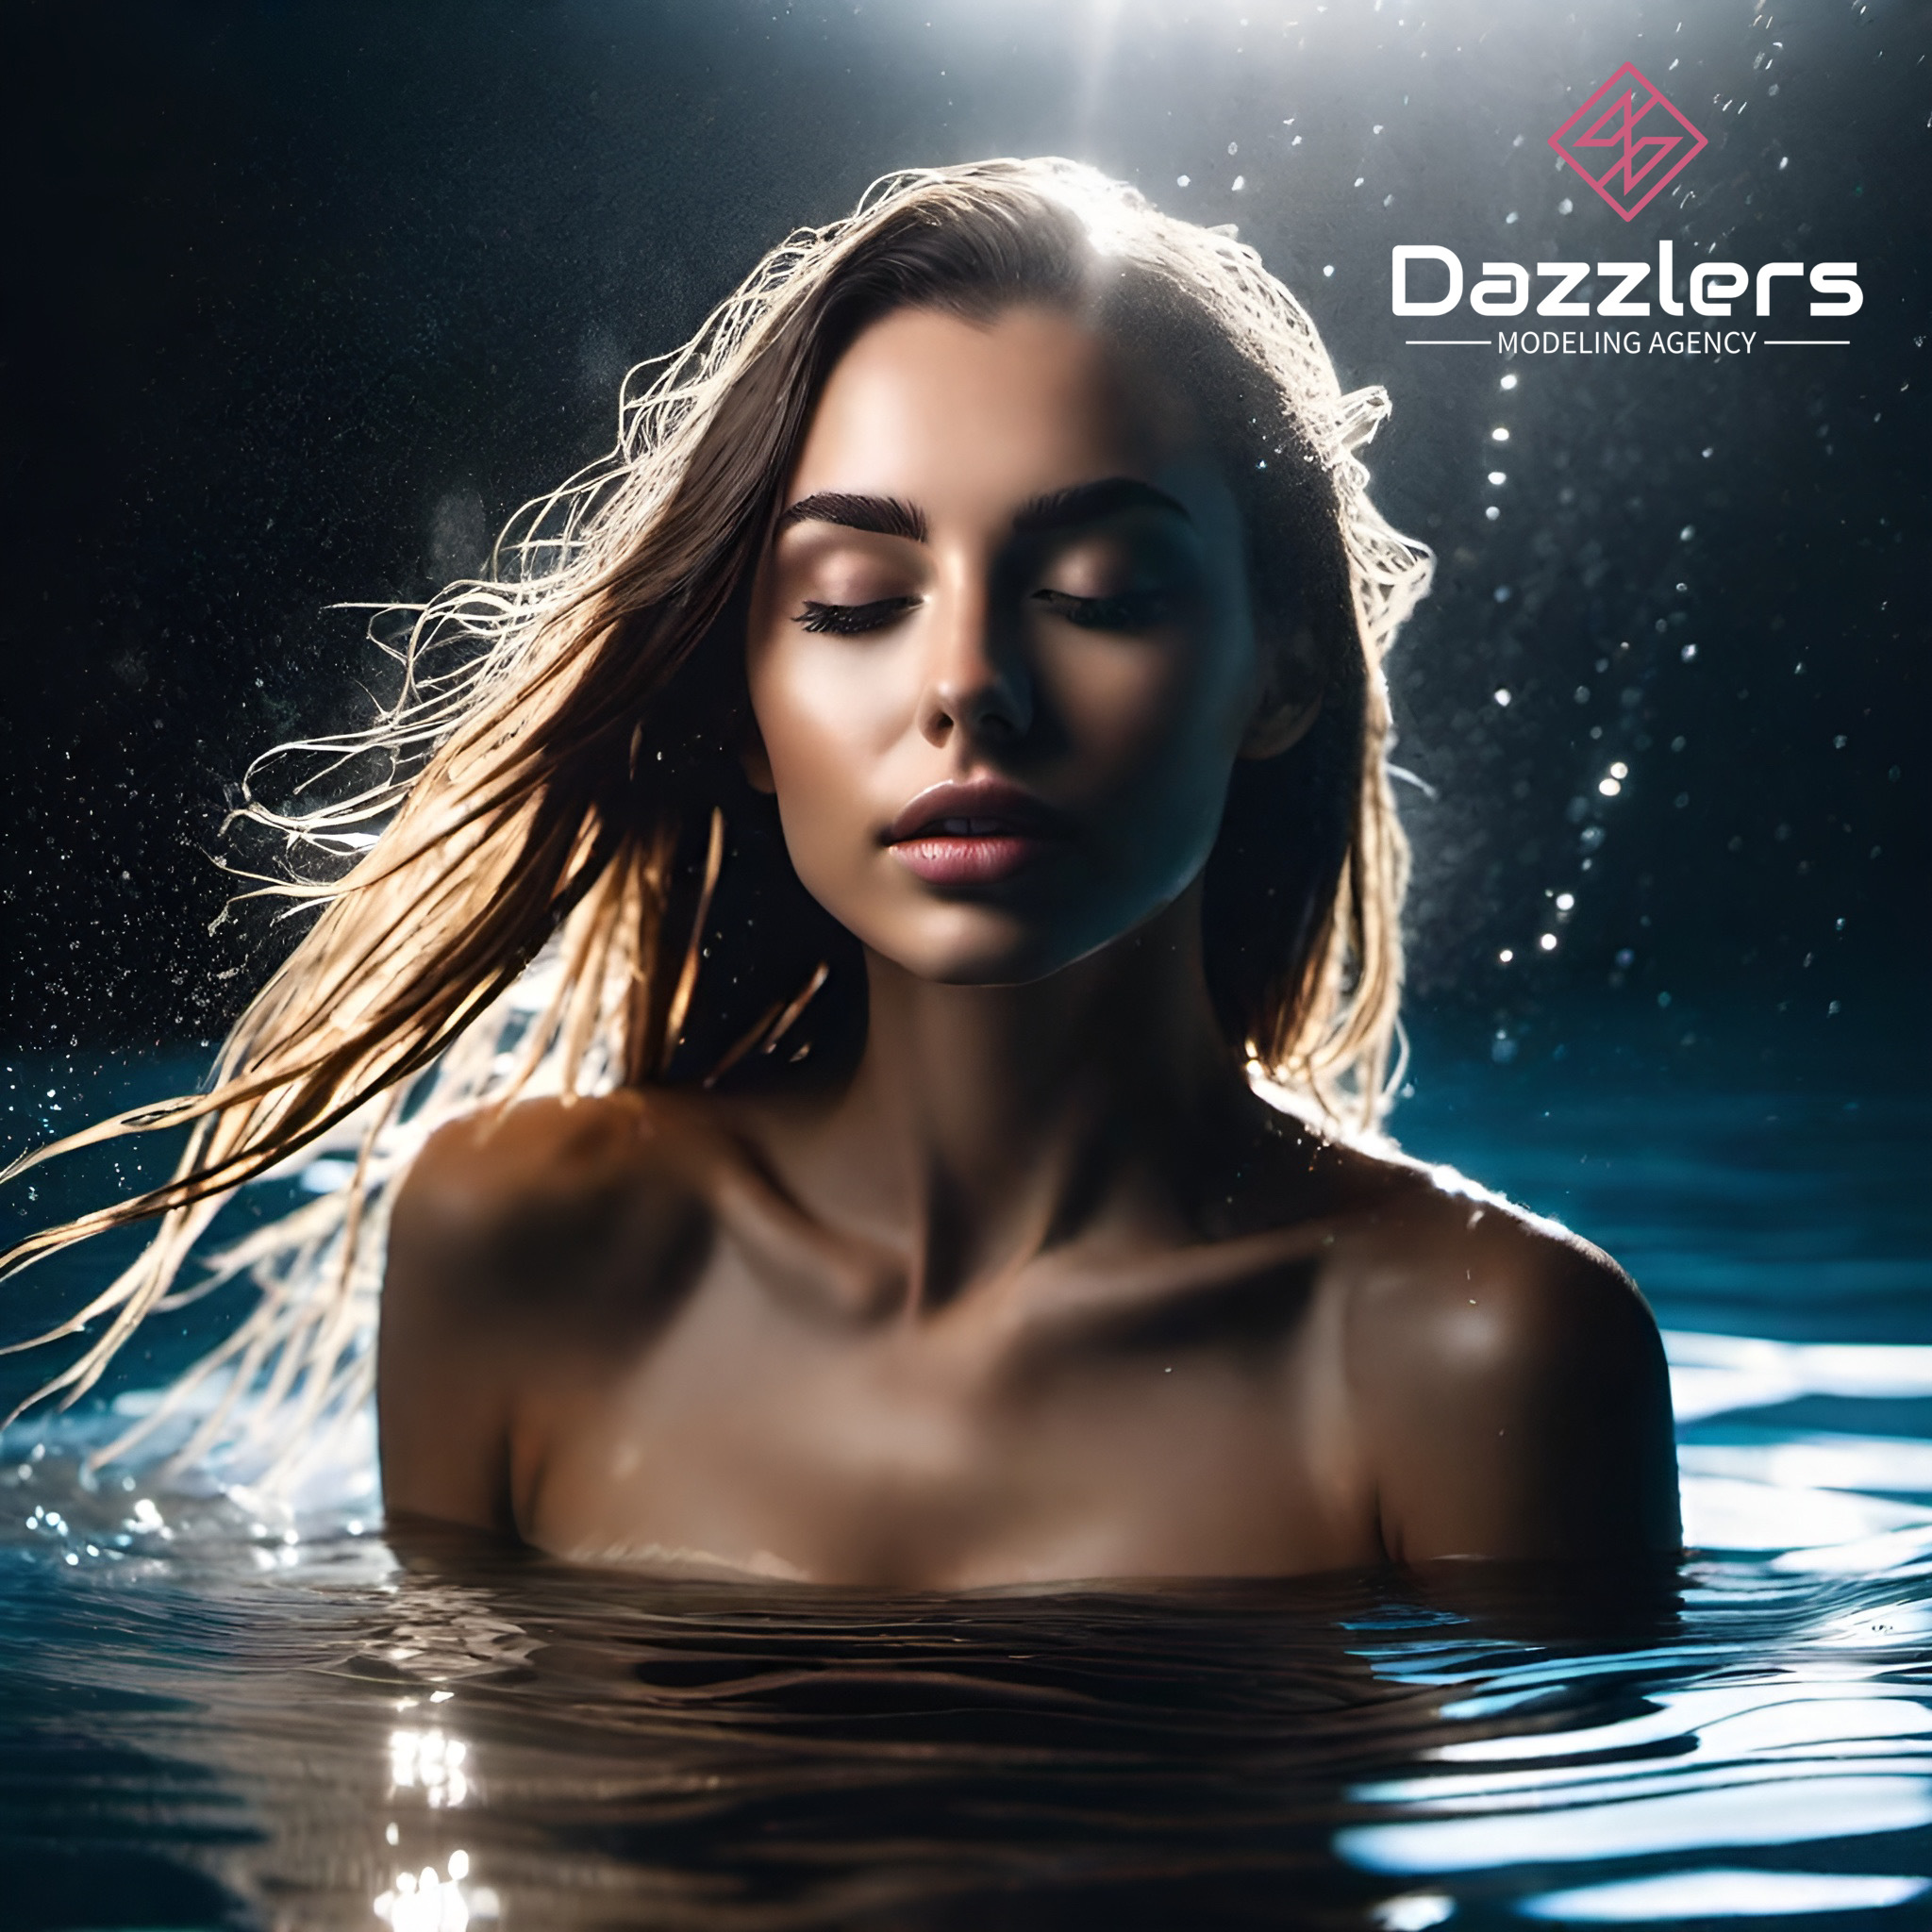 Dazzlers Modeling Agency